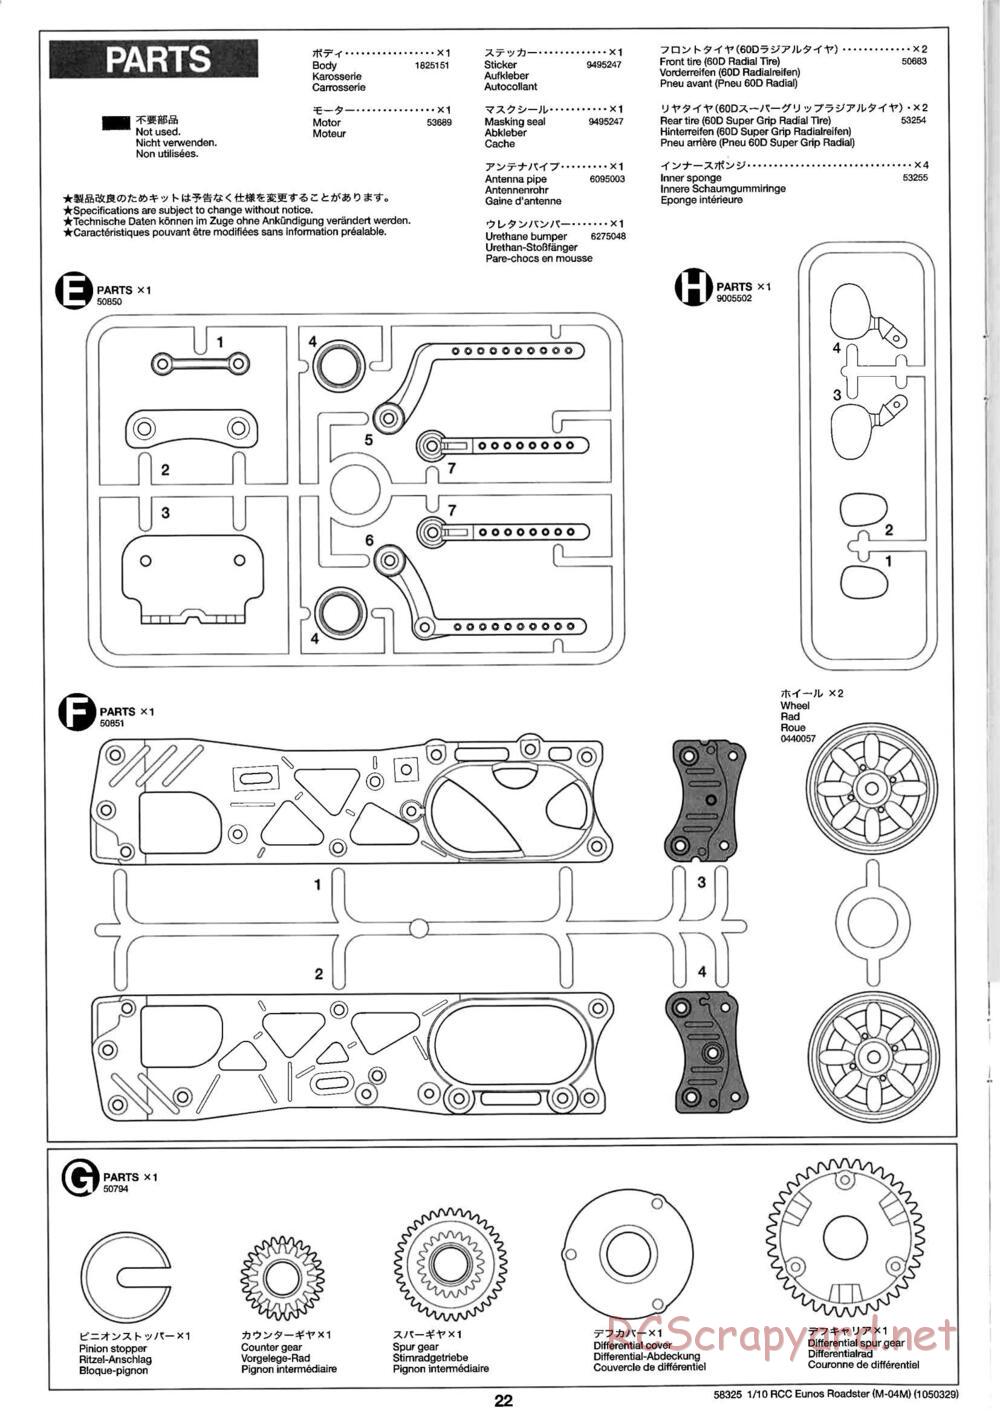 Tamiya - Eunos Roadster - M04M Chassis - Manual - Page 22